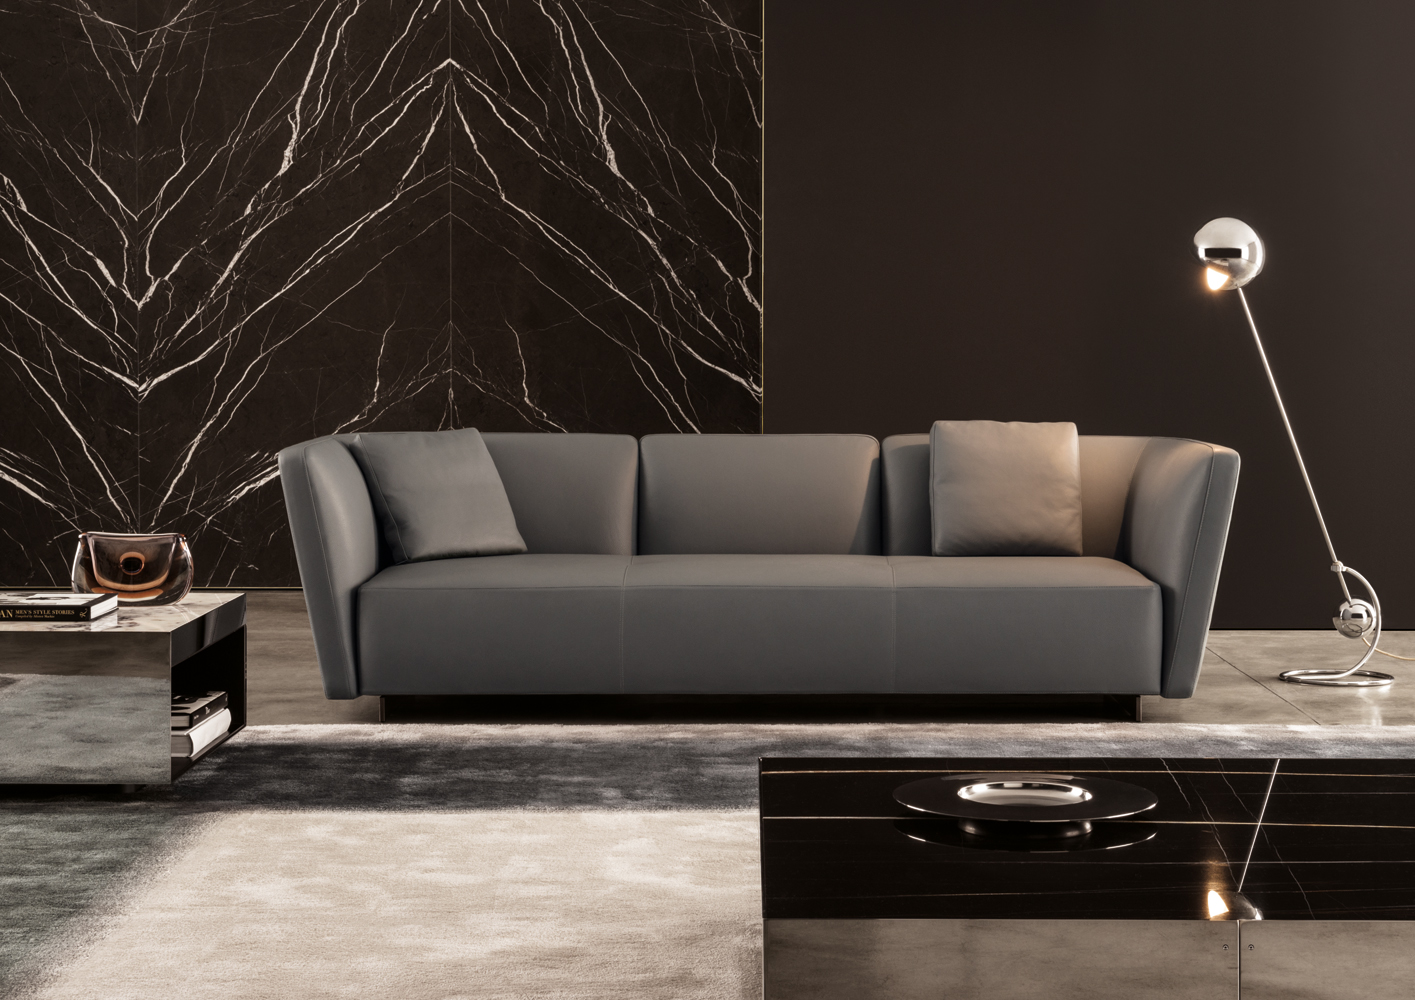 Lounge Seymour leather sofa